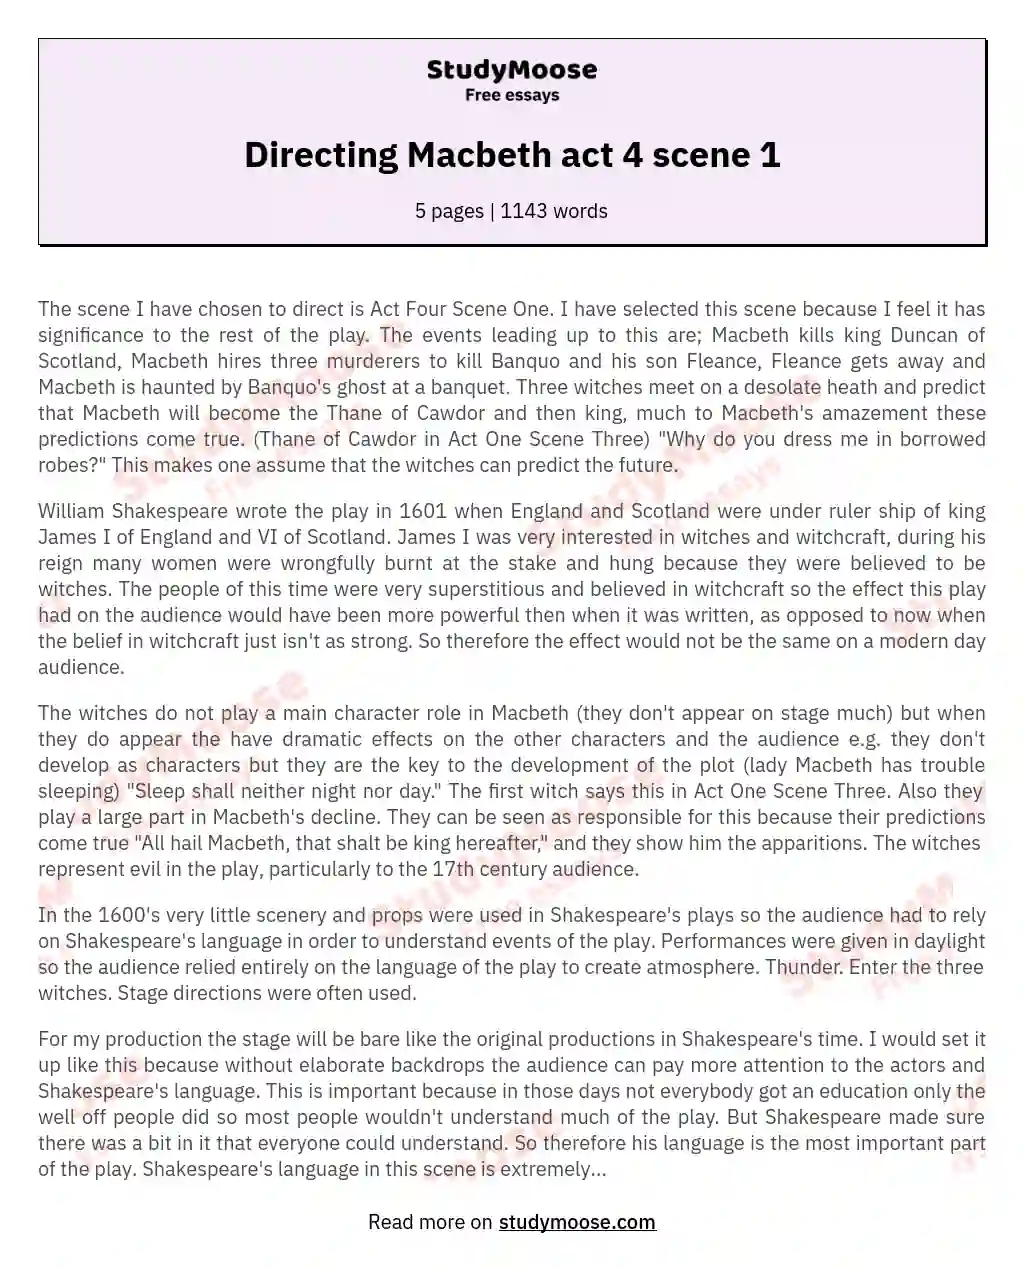 Directing Macbeth act 4 scene 1 essay